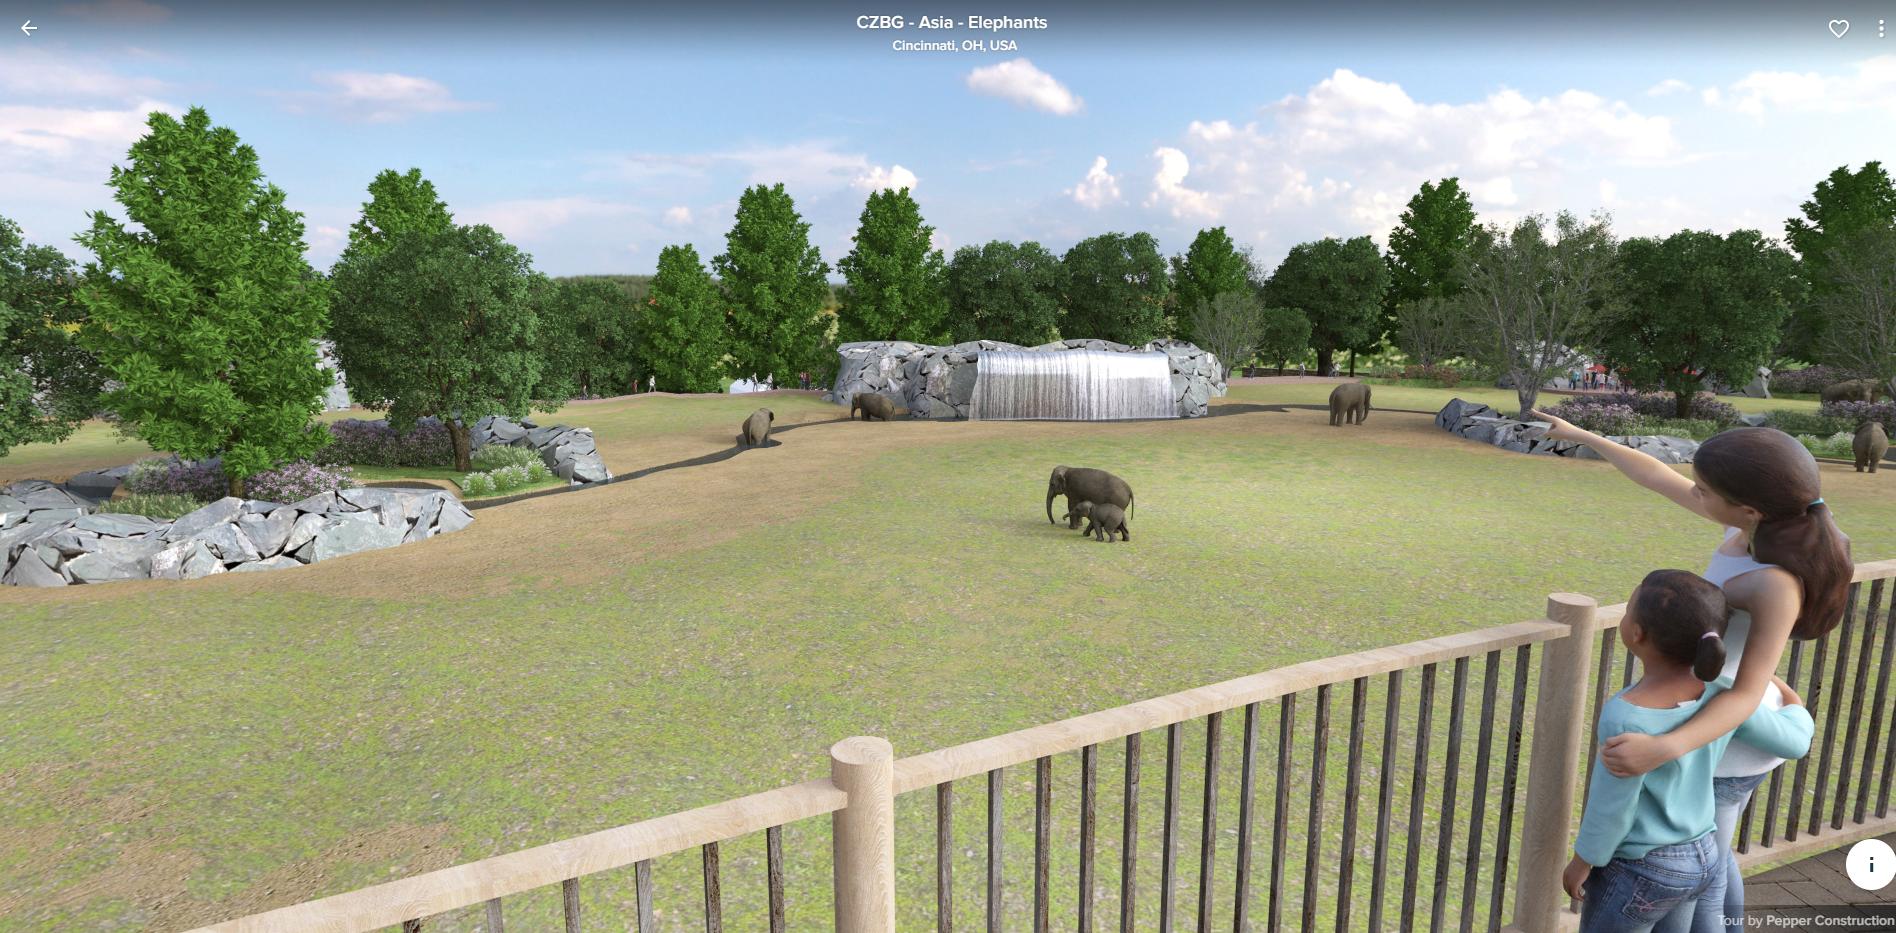 Virtual Reality view of elephant habitat